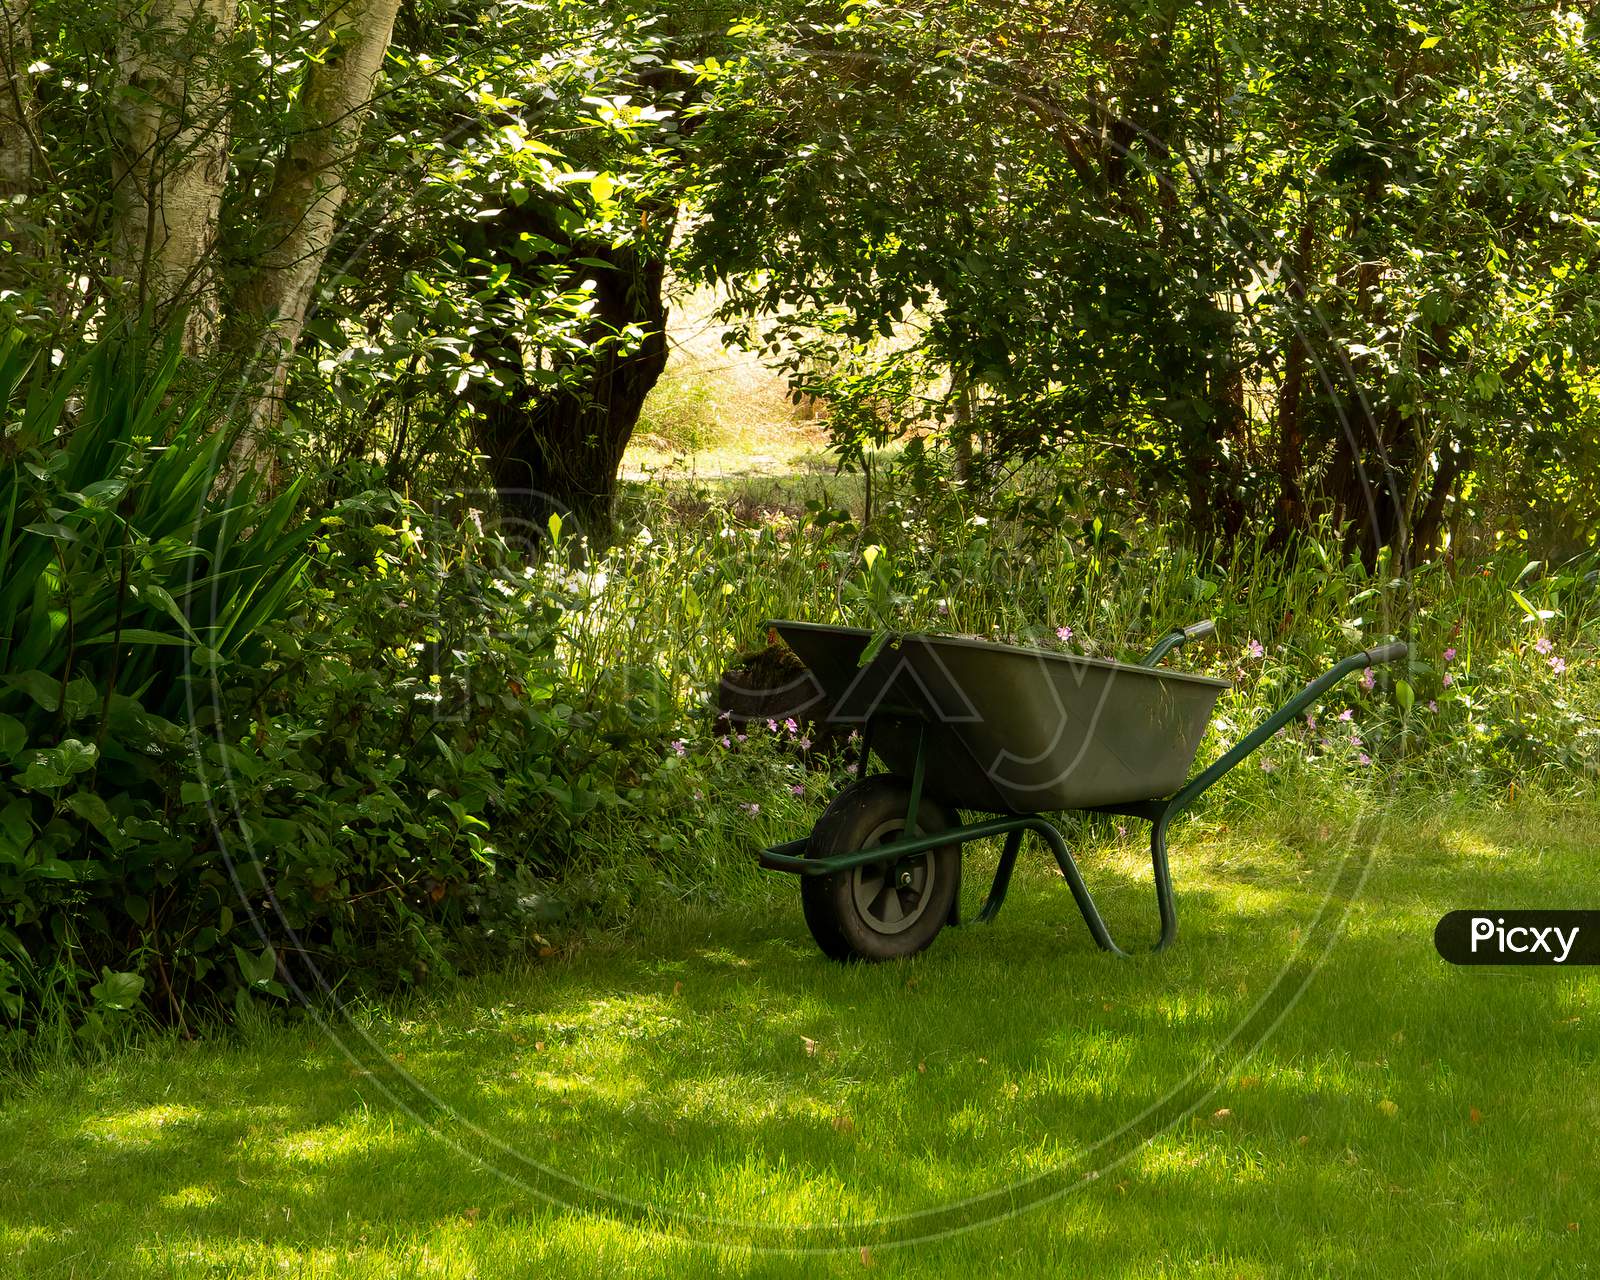 Wheelbarrow full of  weeds  in garden. No people. Concept of garden recreation and helping environment